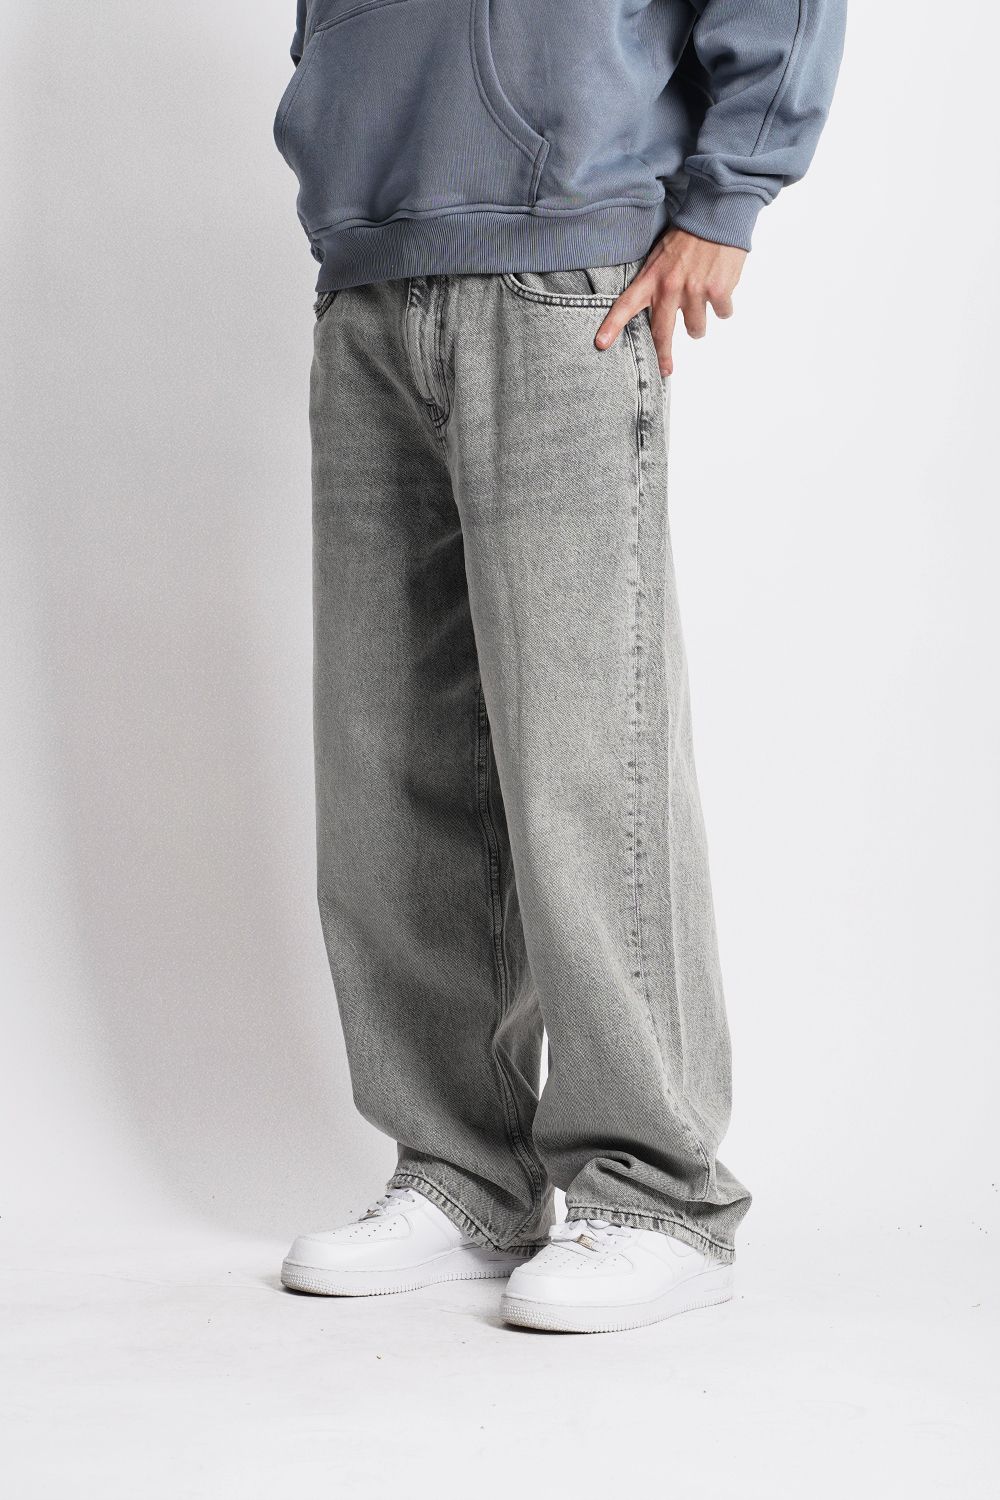 Grey Tint Jack Jeans (URBN-B-174)